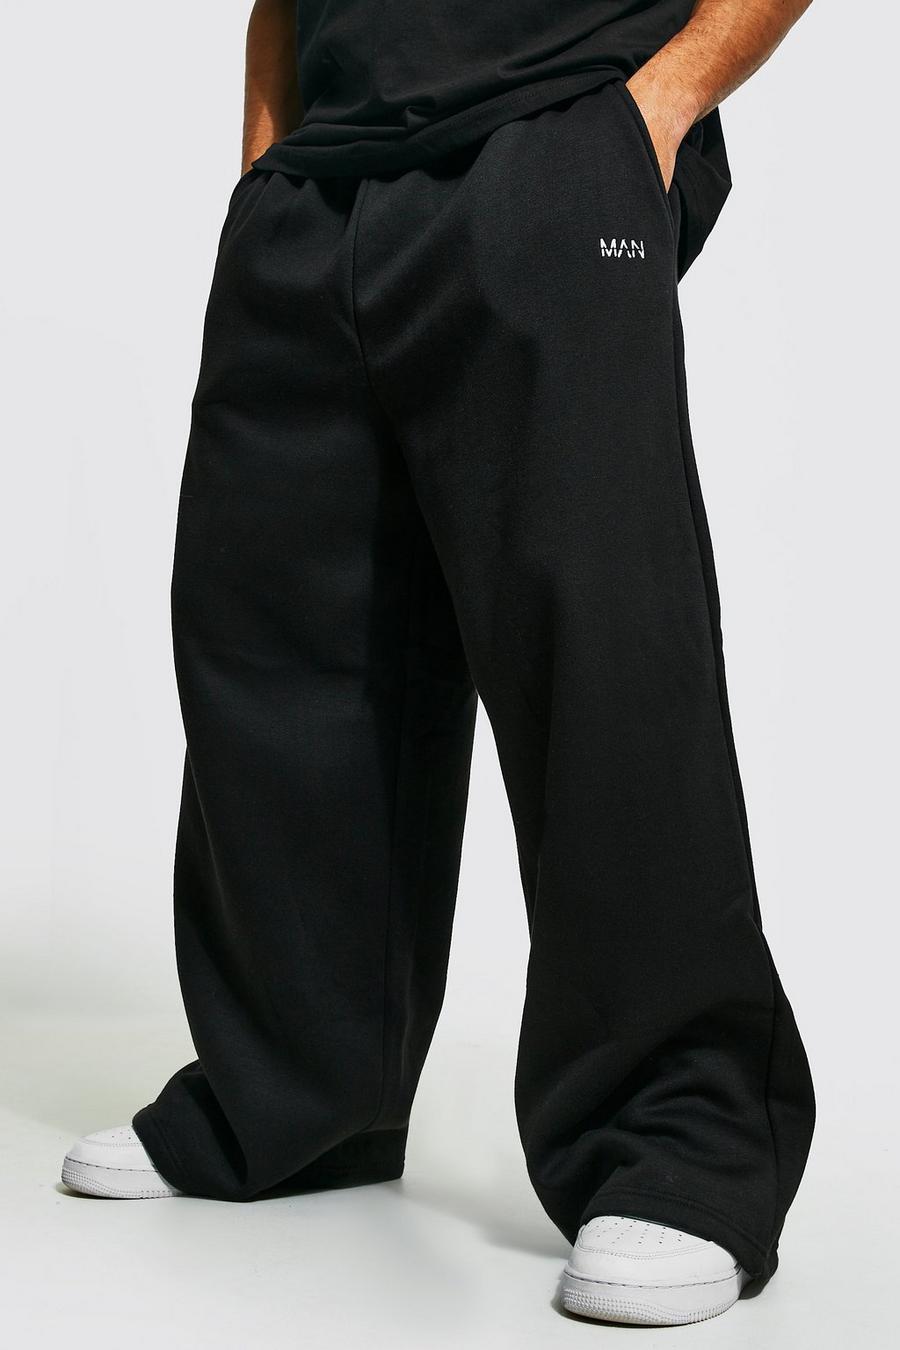 Pantaloni tuta Man con gamba extra ampia e ricami, Black nero image number 1